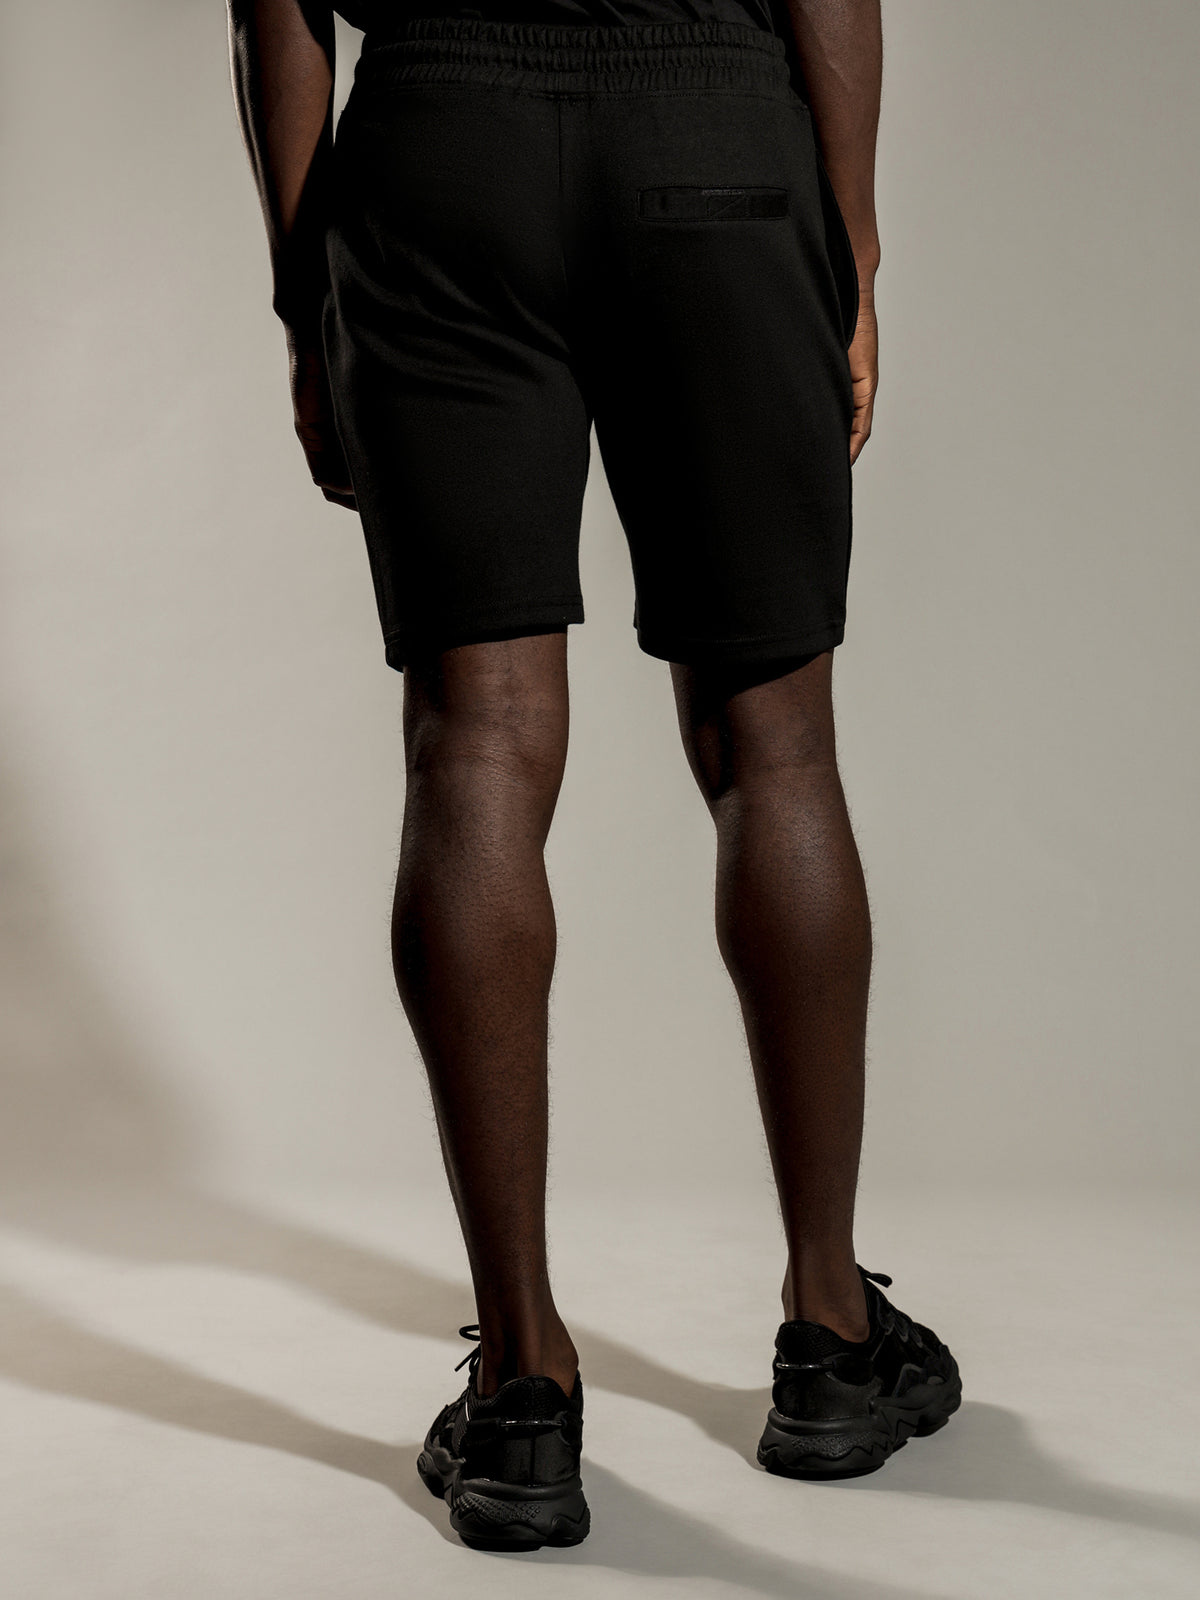 Knox Fleece Shorts in Black